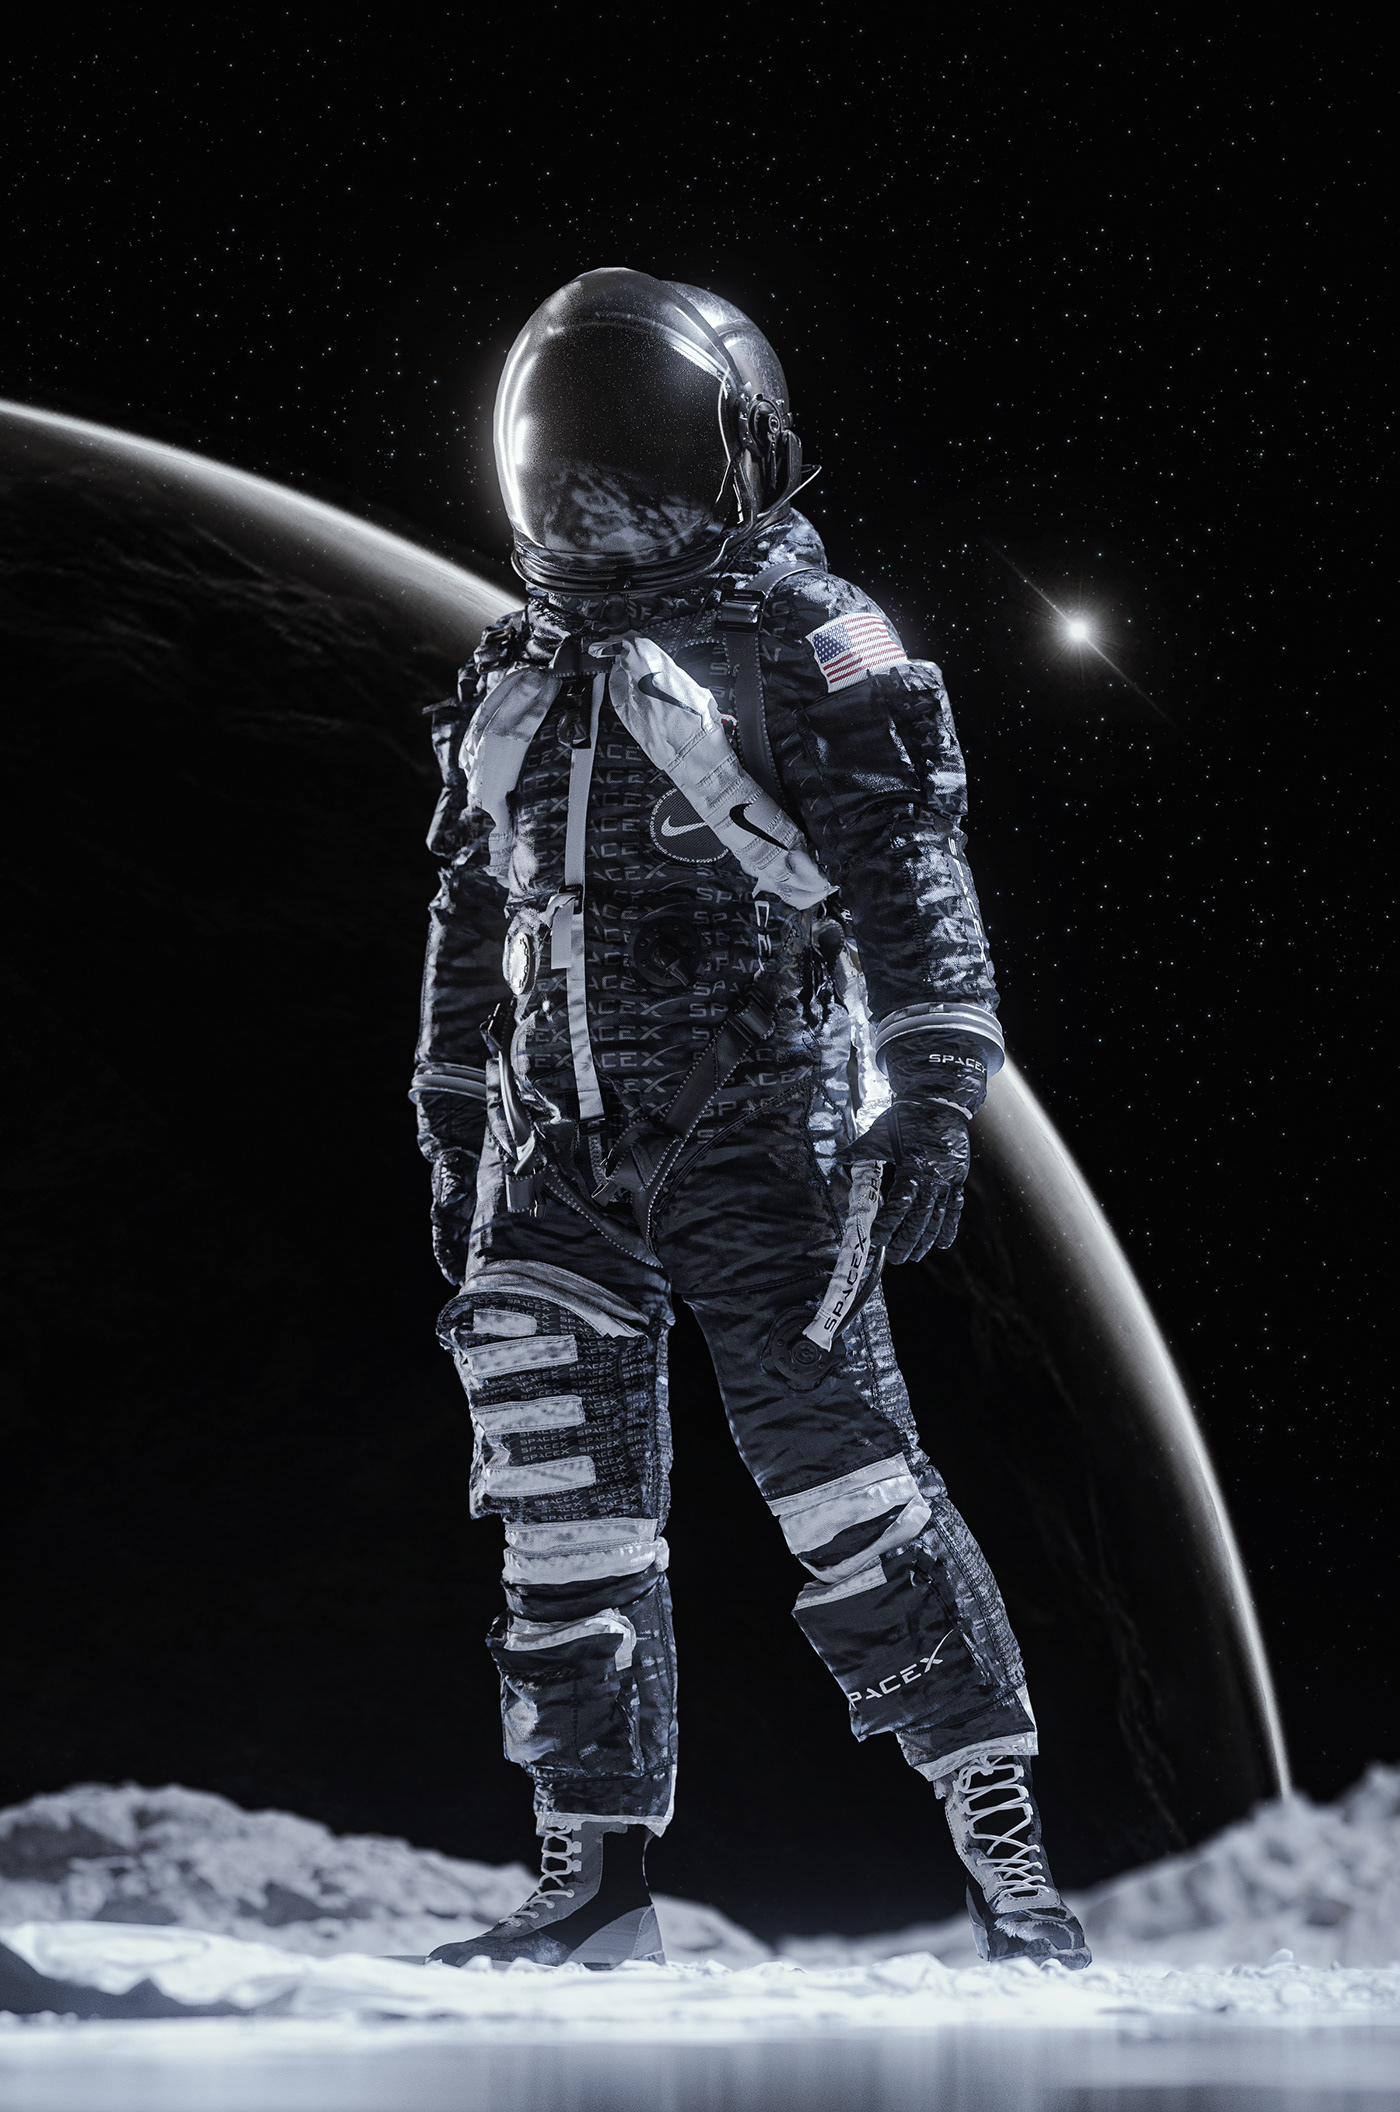 3D cinema 4d Nike spacex astronaut design merchandise product